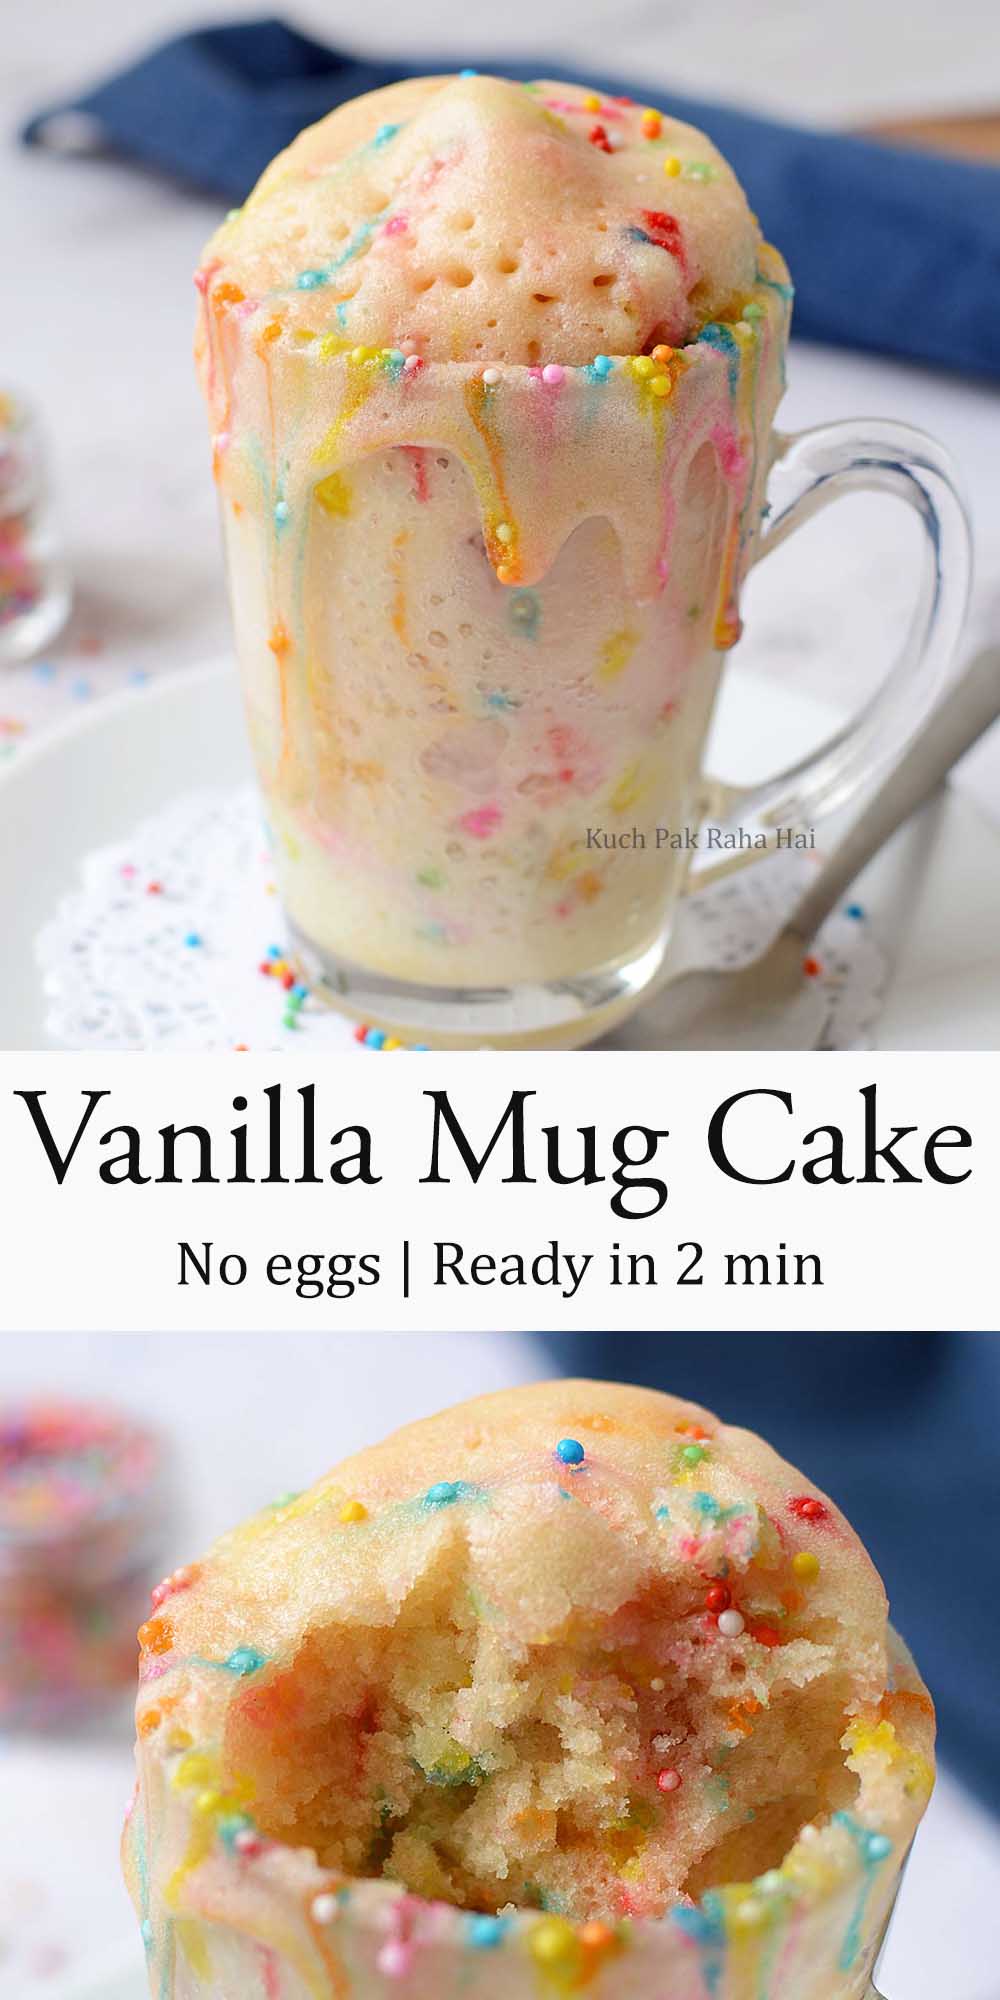 Microwave vanilla mug cake no eggs.